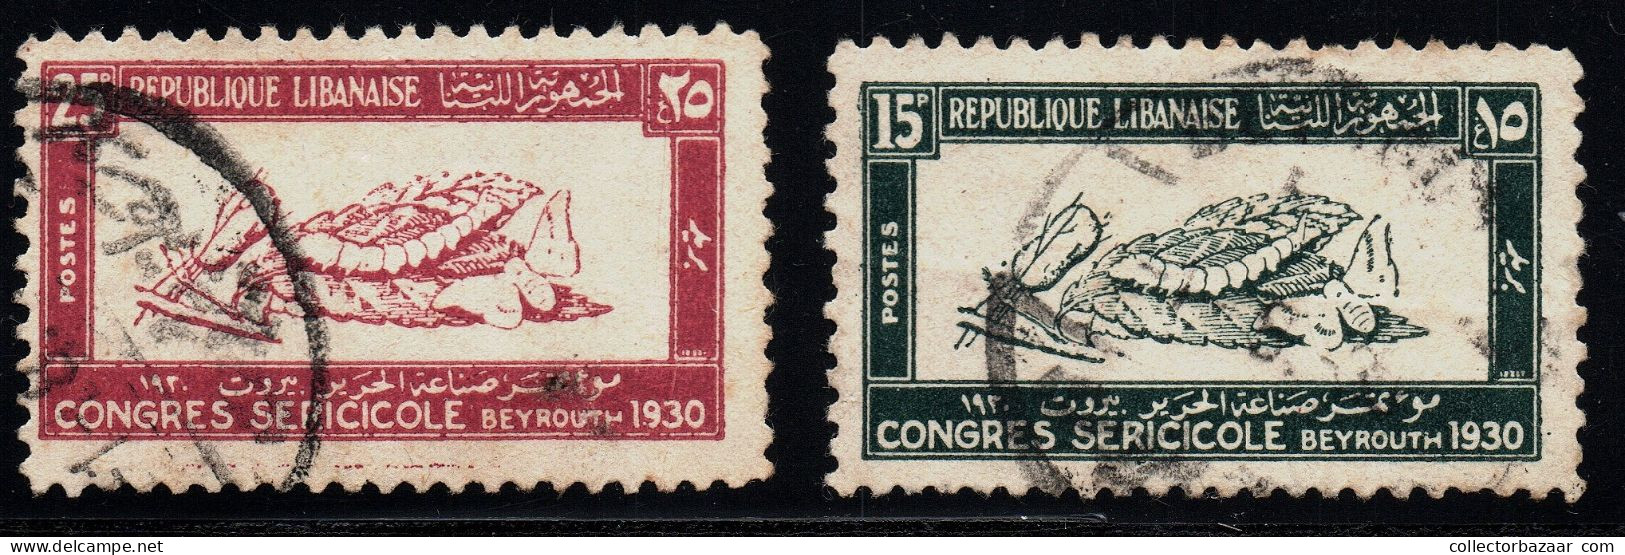 Liban Lebanon Silk Moth Michel 163-164 Used Scott 112 - 113 Very Nice Stamps Cv$25 - Liban